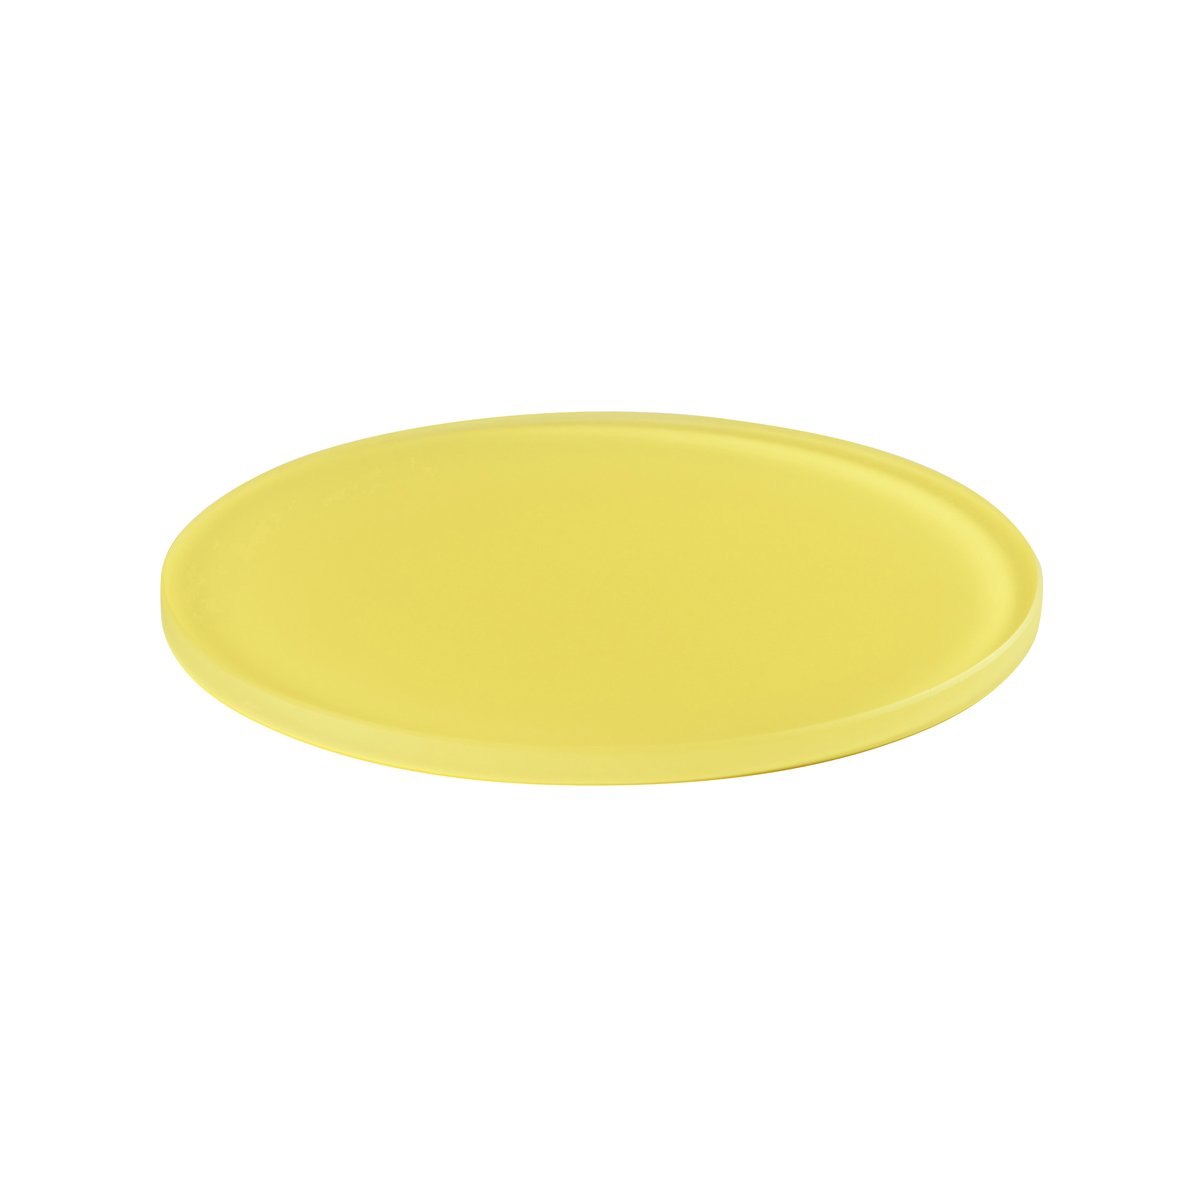 MLP111392 Mealplak Round Tray Lemon 300x10mm Tomkin Australia Hospitality Supplies